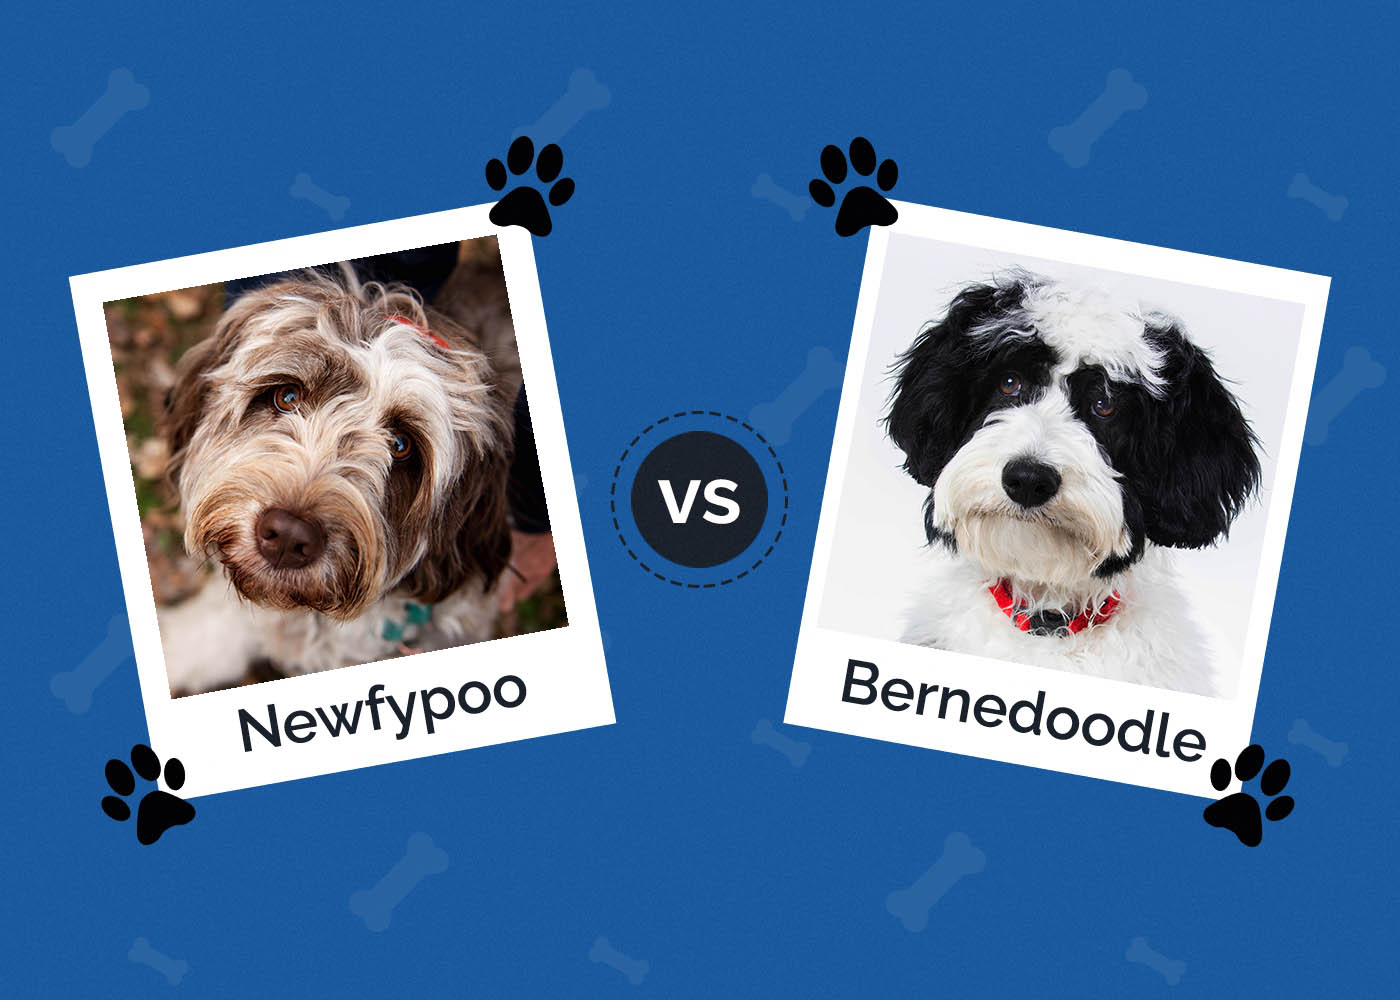 Newfypoo vs Bernedoodle